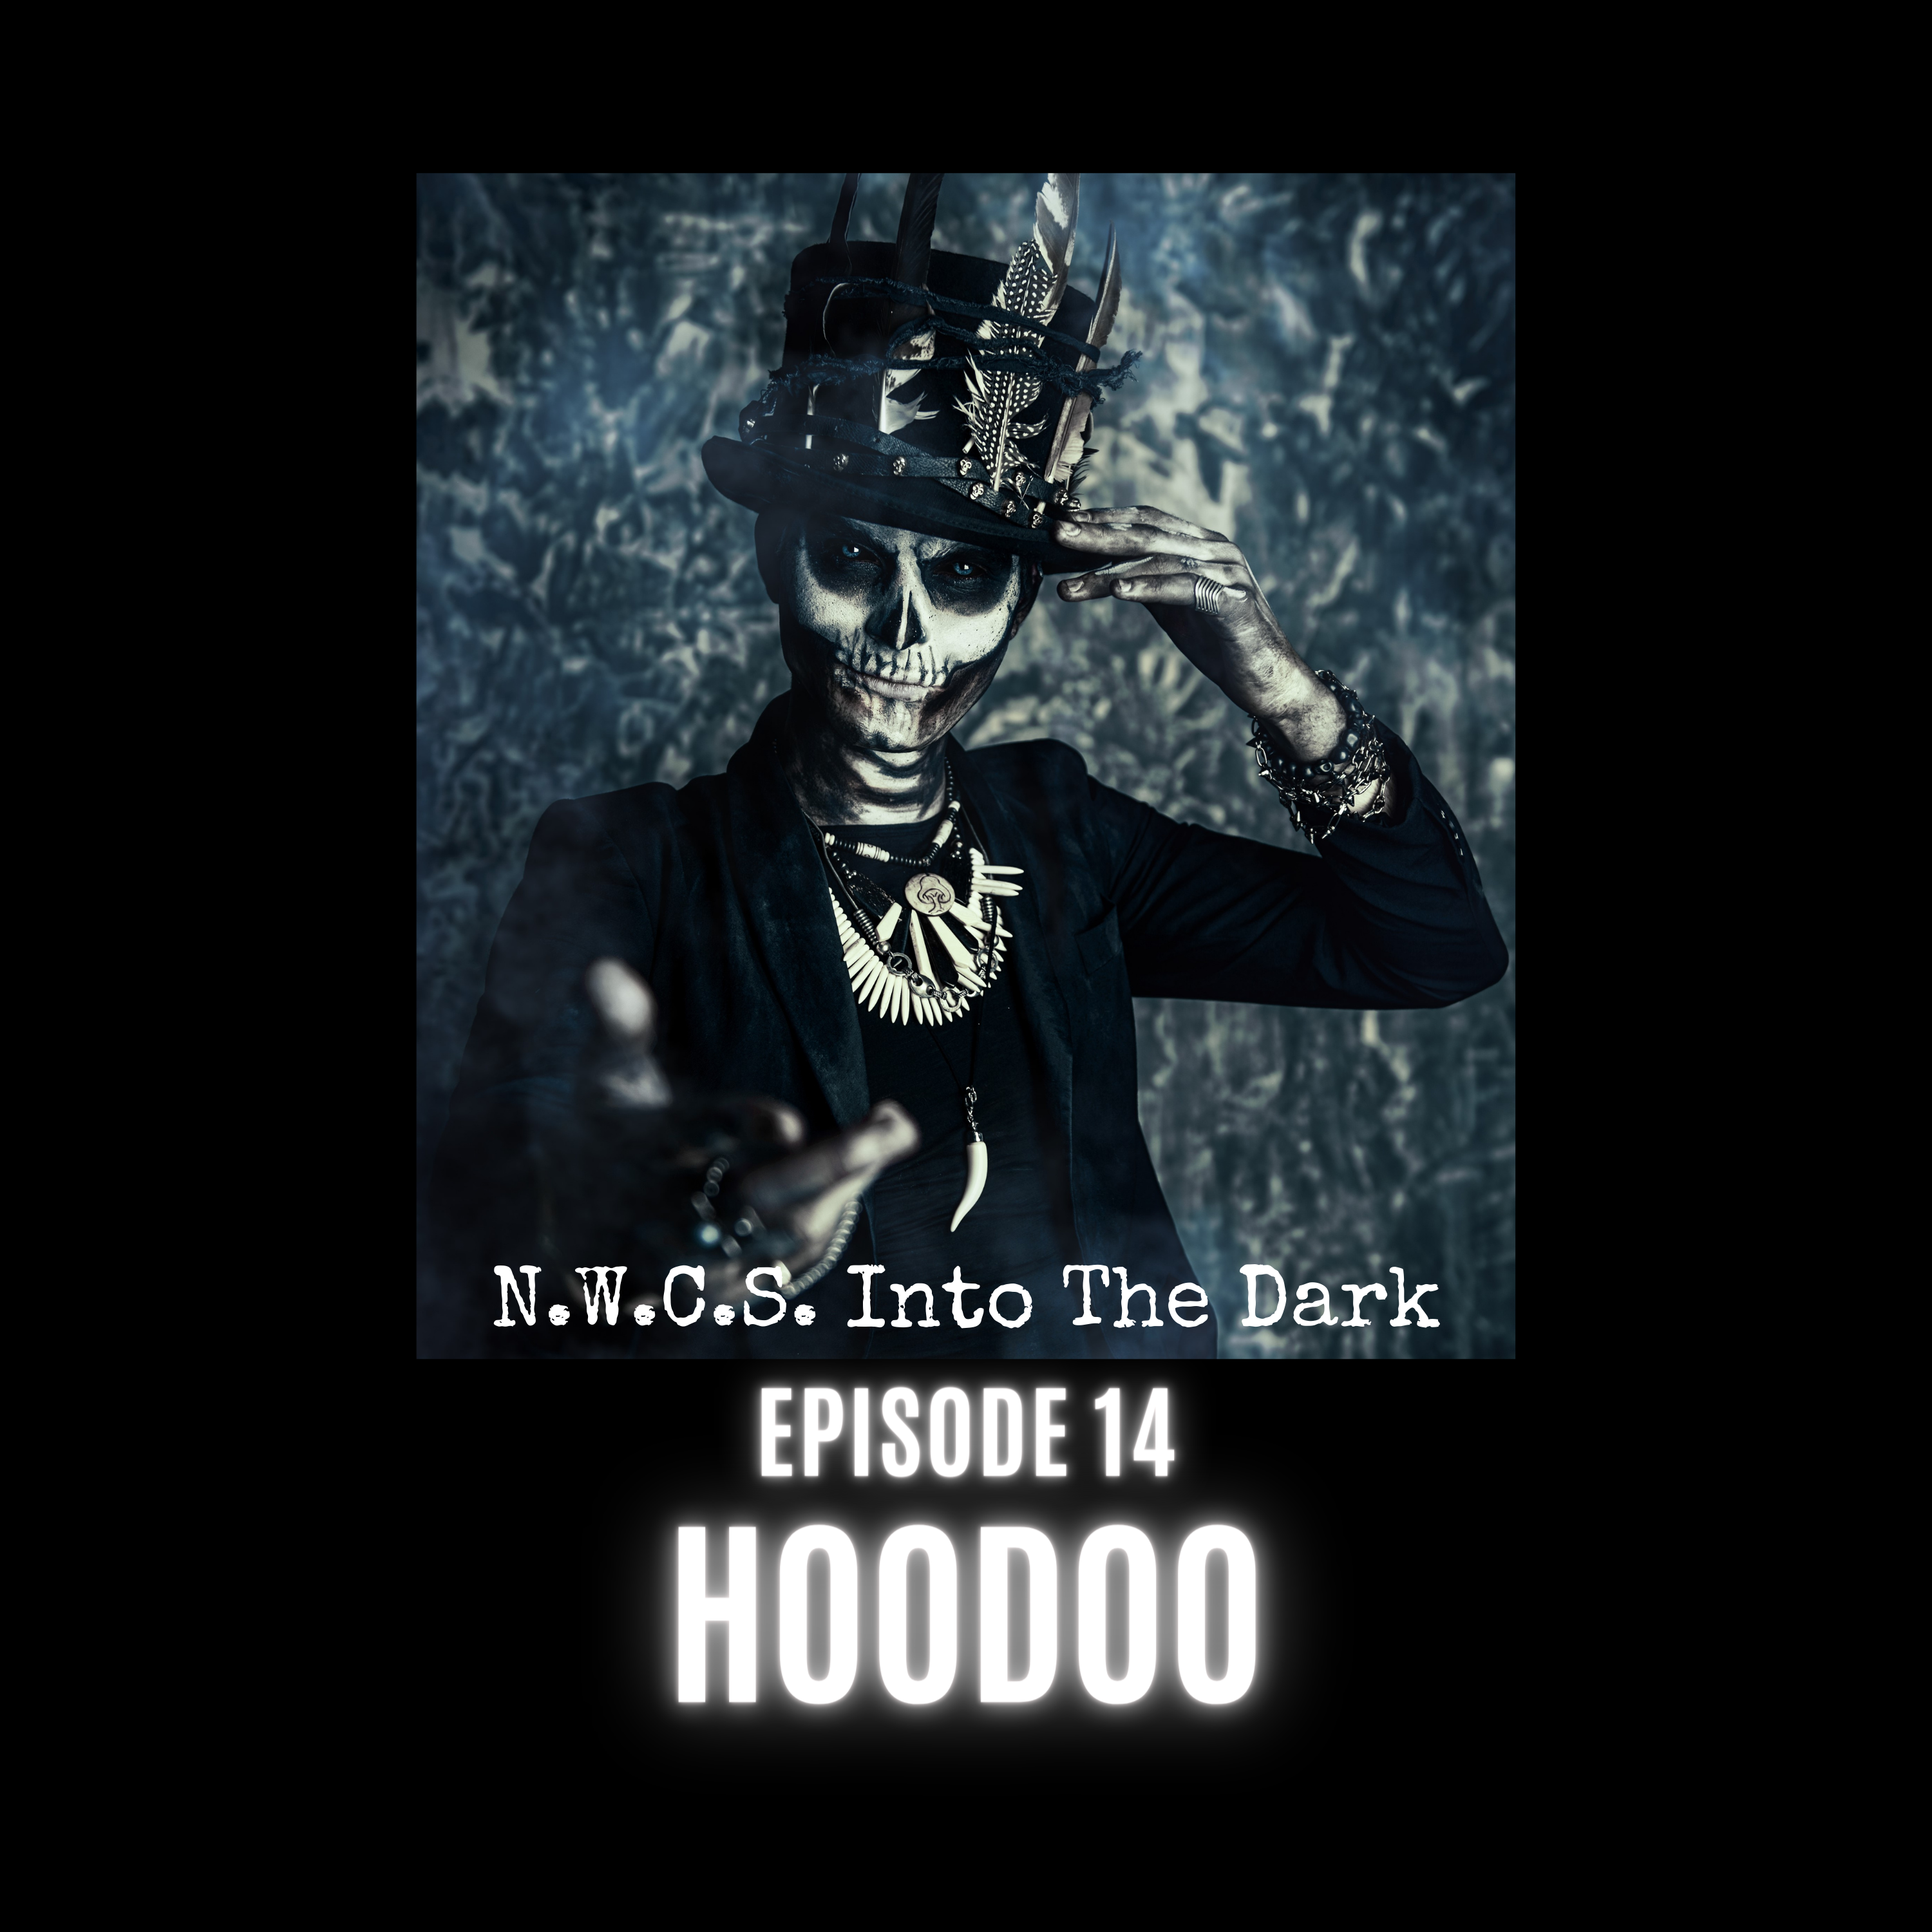 N.W.C.S. Into The Dark Episode 14 - Hoodoo